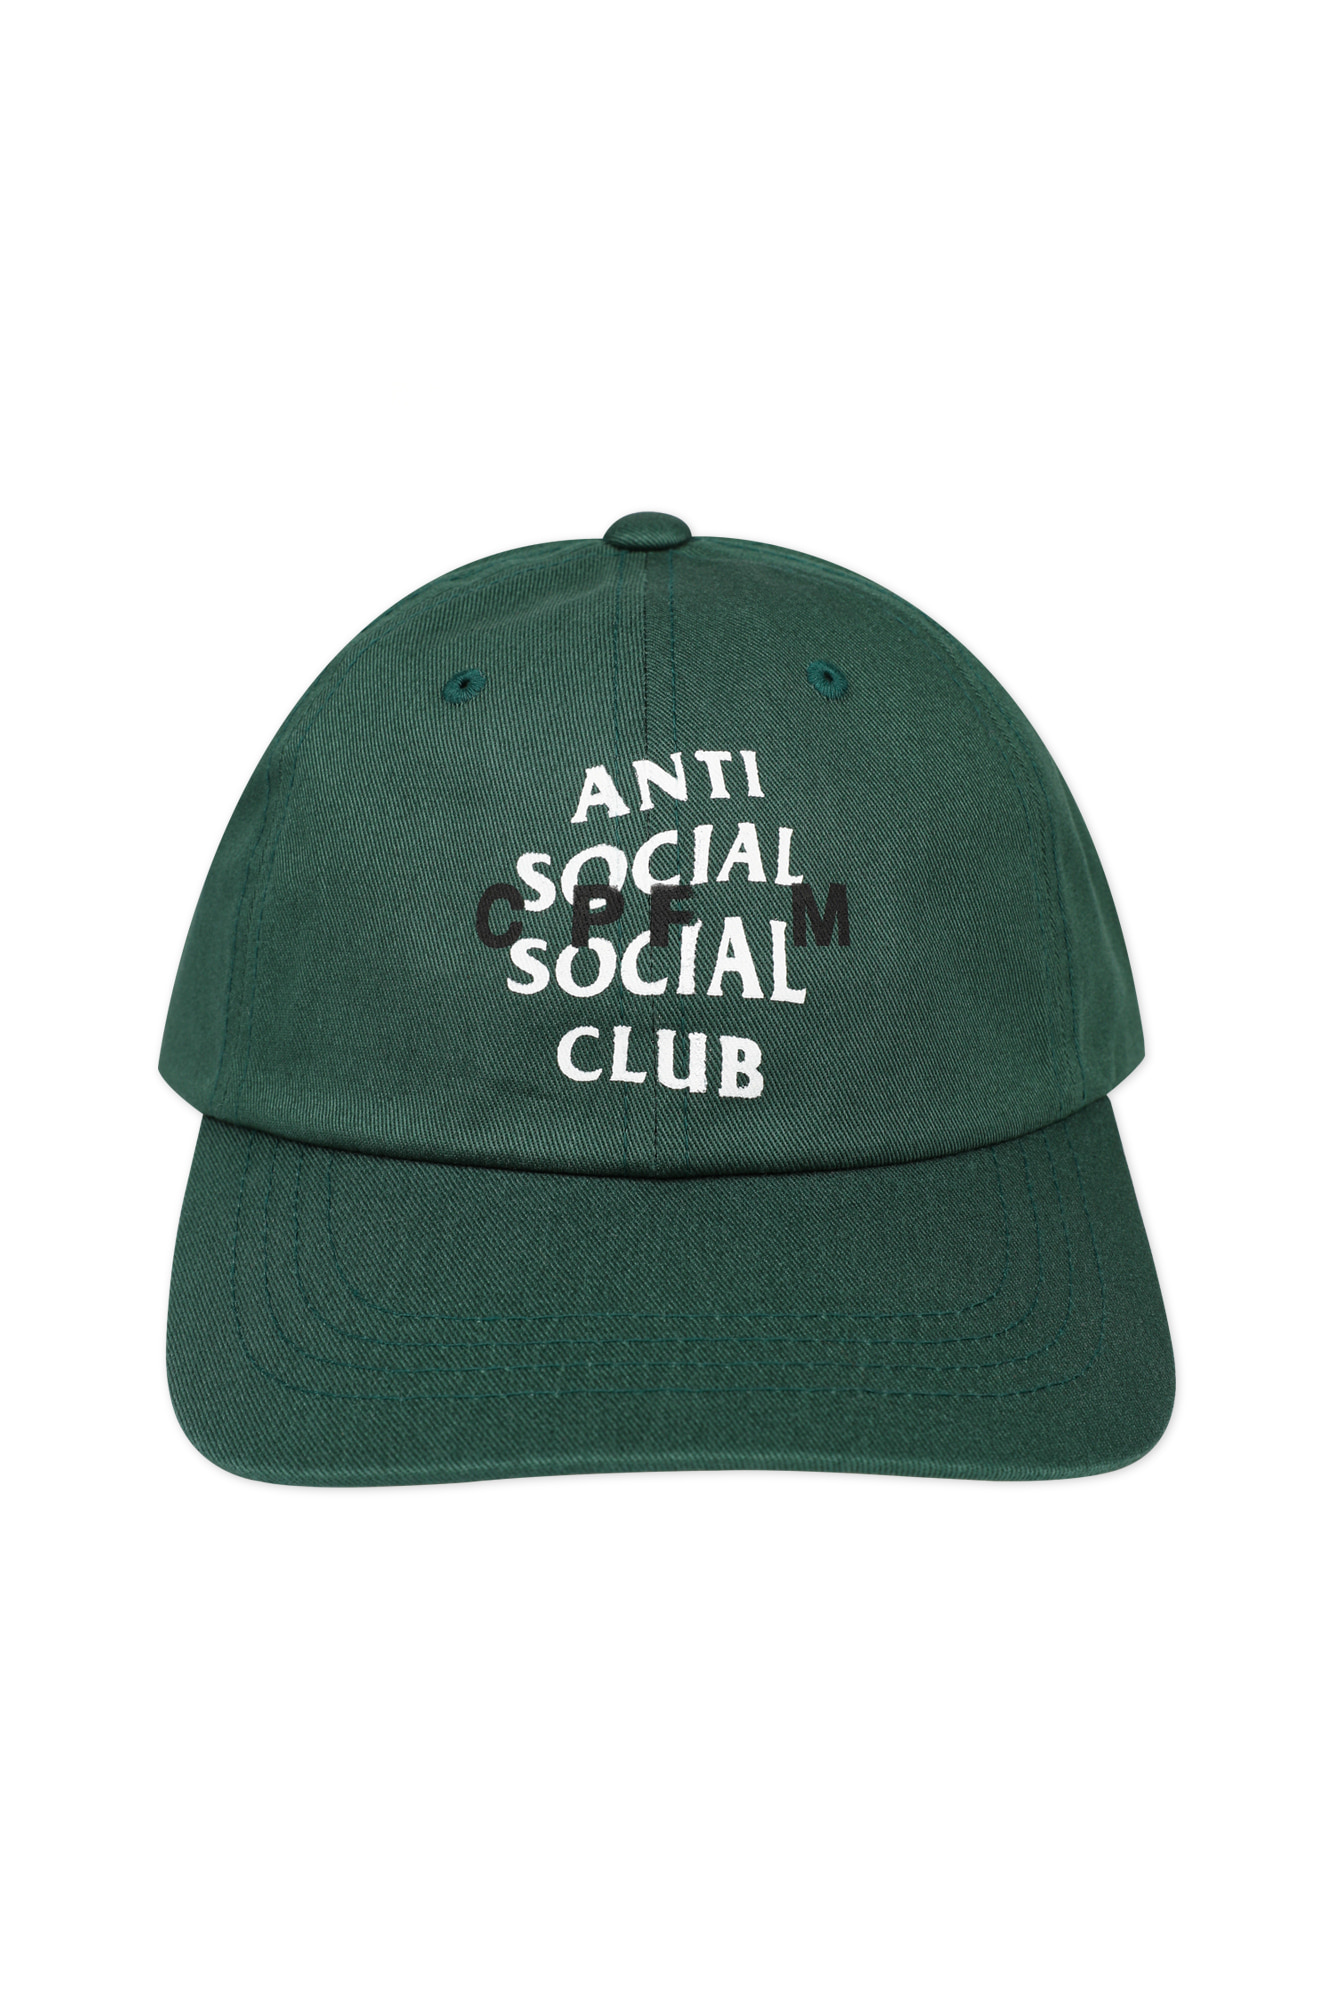 Anti Social Social Club x Cactus Plant Flea Market